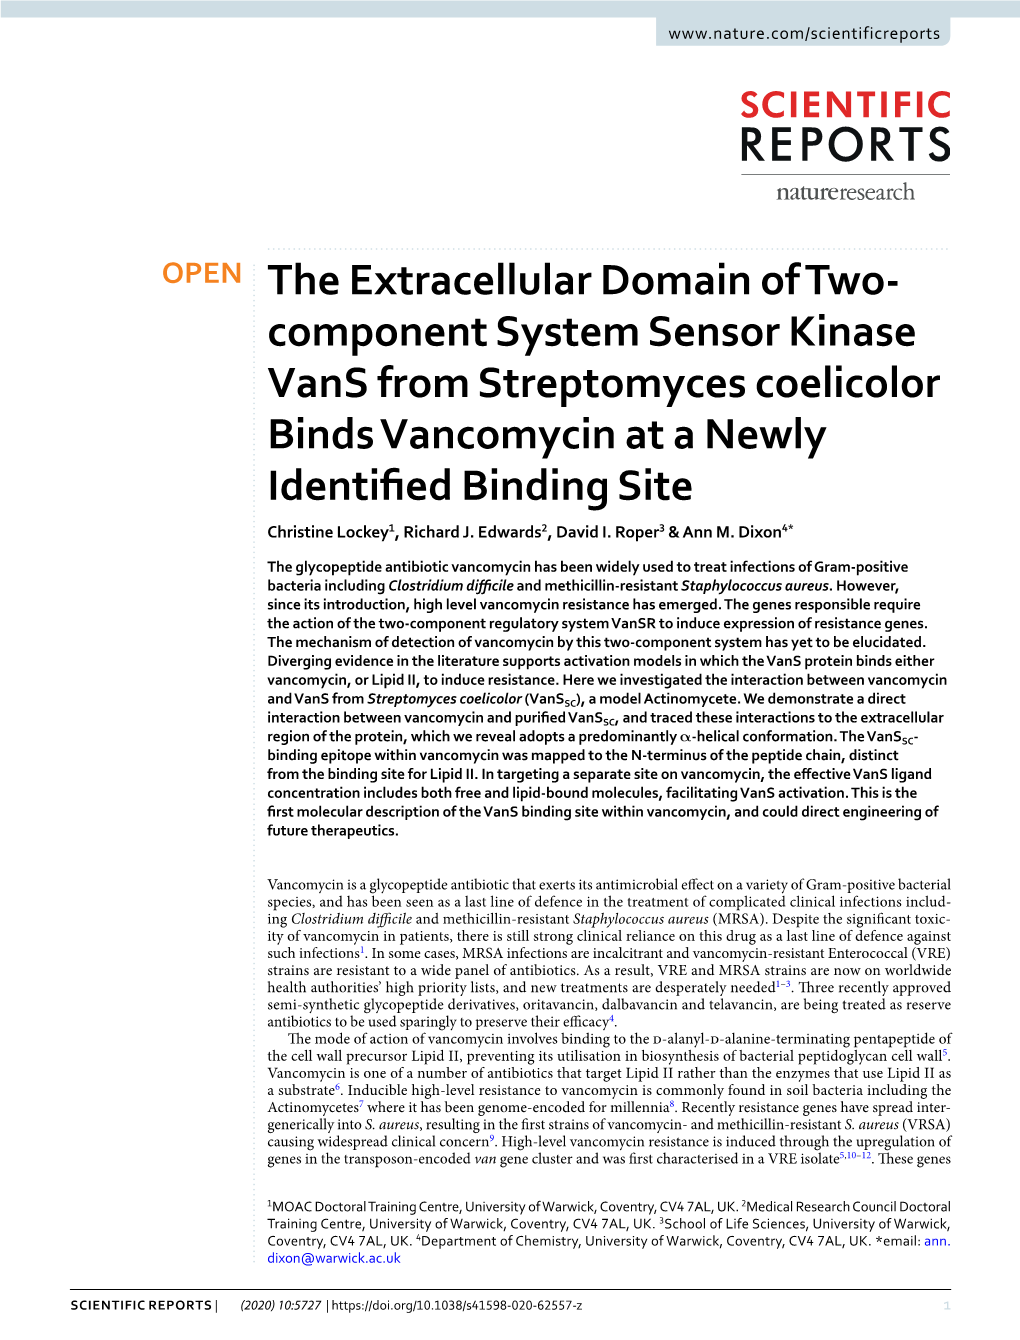 Component System Sensor Kinase Vans from Streptomyces Coelicolor Binds Vancomycin at a Newly Identifed Binding Site Christine Lockey1, Richard J